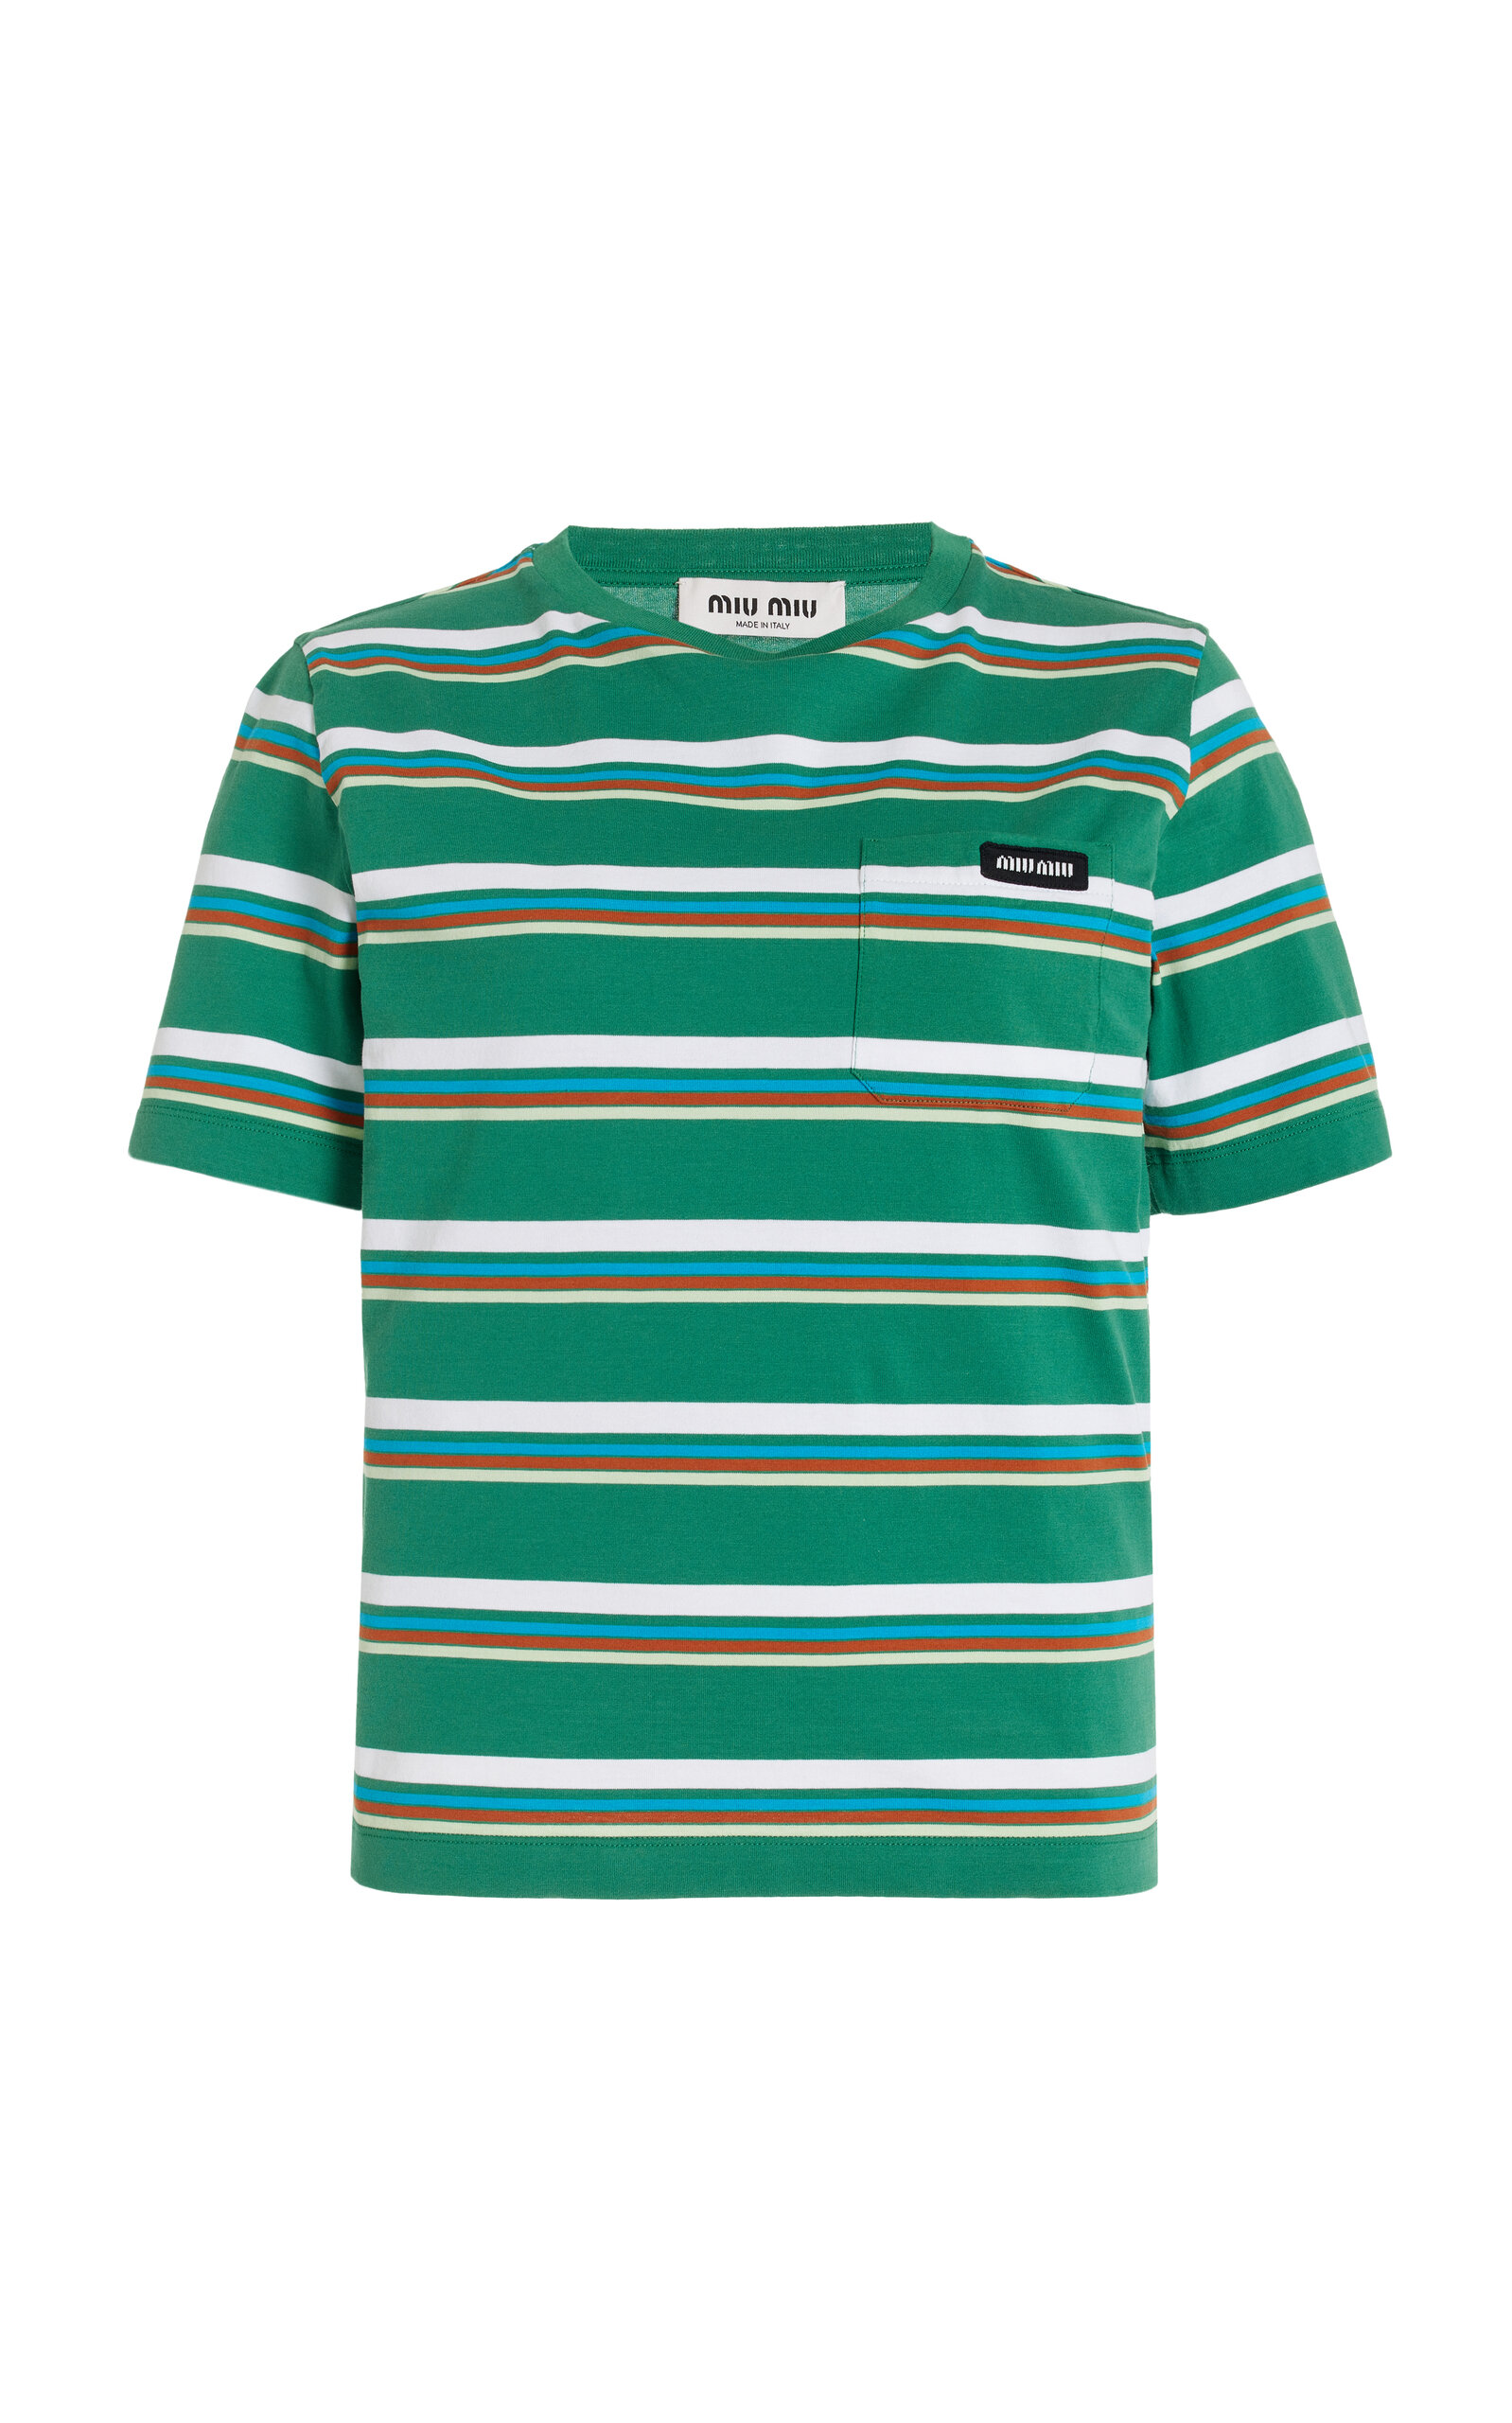 Miu Miu Striped Cotton Jersey T-shirt In Green